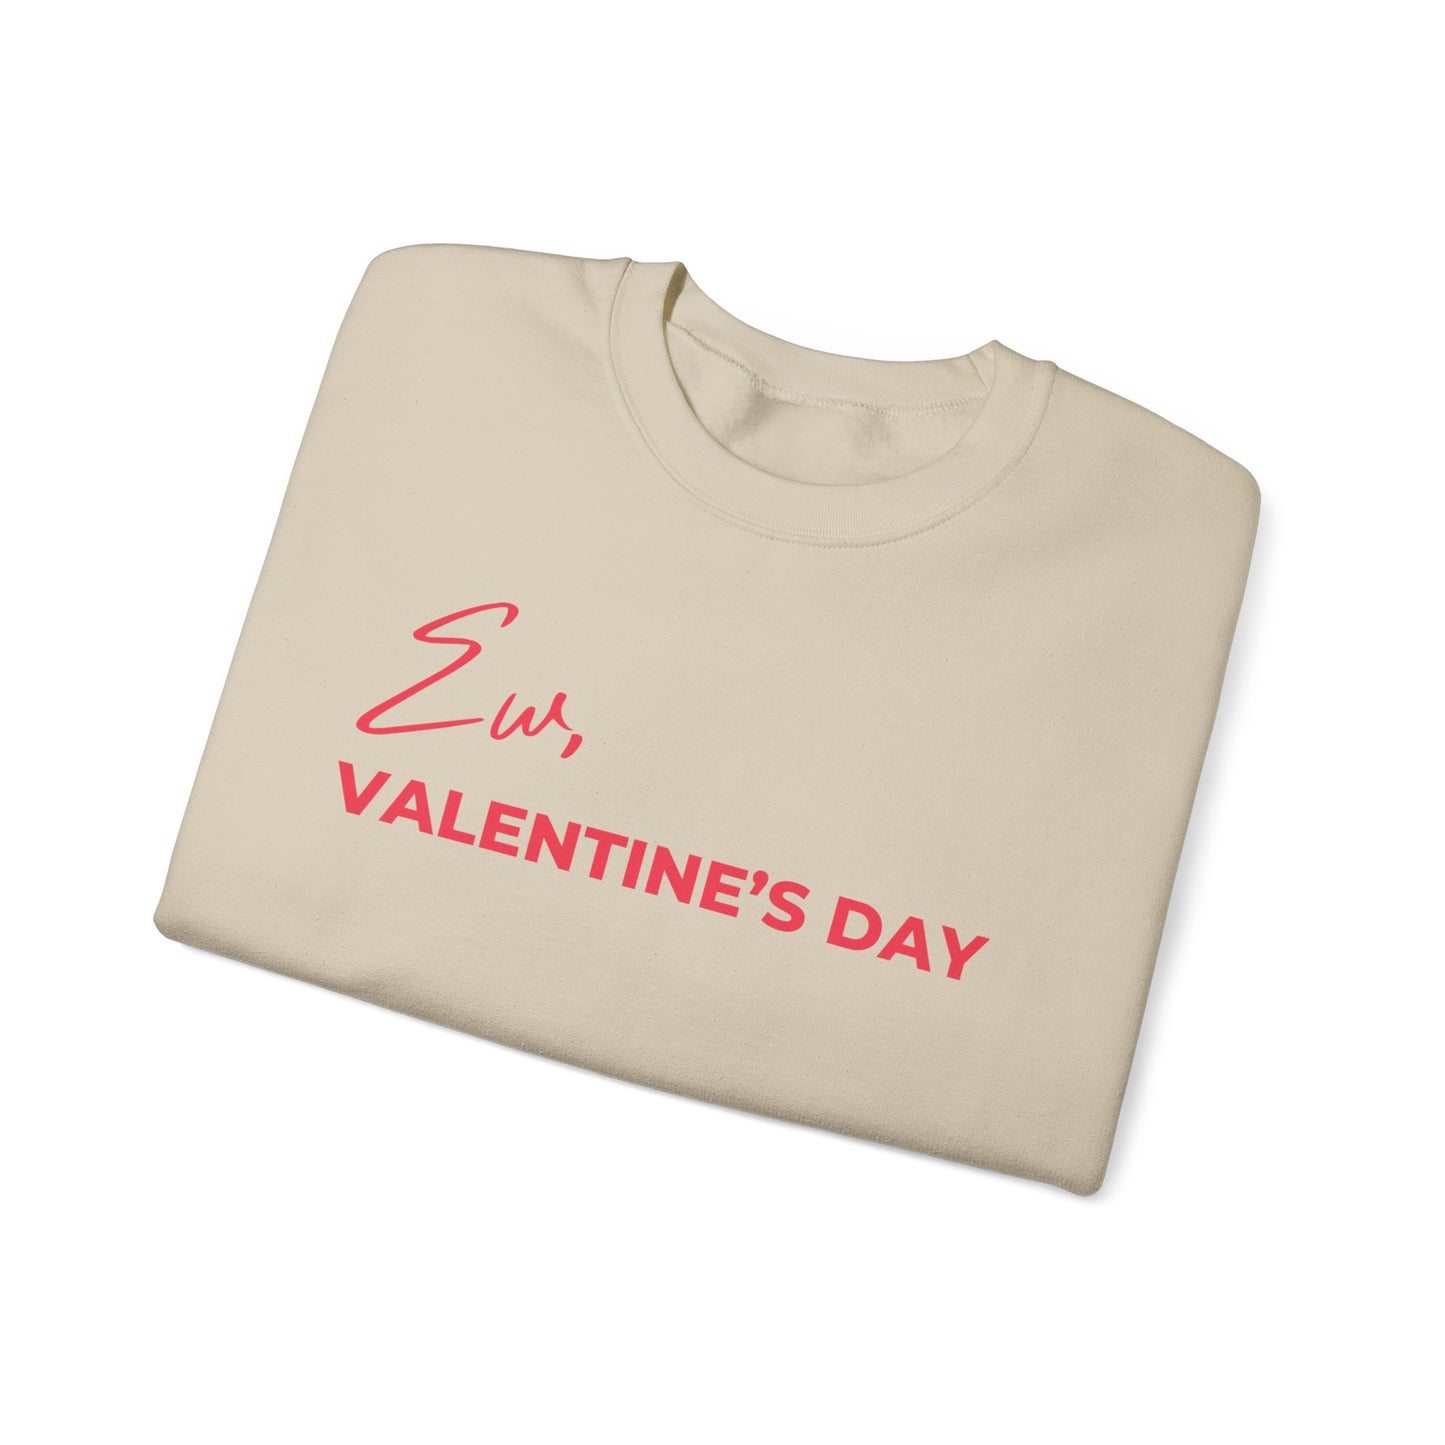 Ew Valentines Day Sweatshirt, Funny Valentines Day Sweater, Gift for bestie, Anti Valentines Day, Premium Crewneck